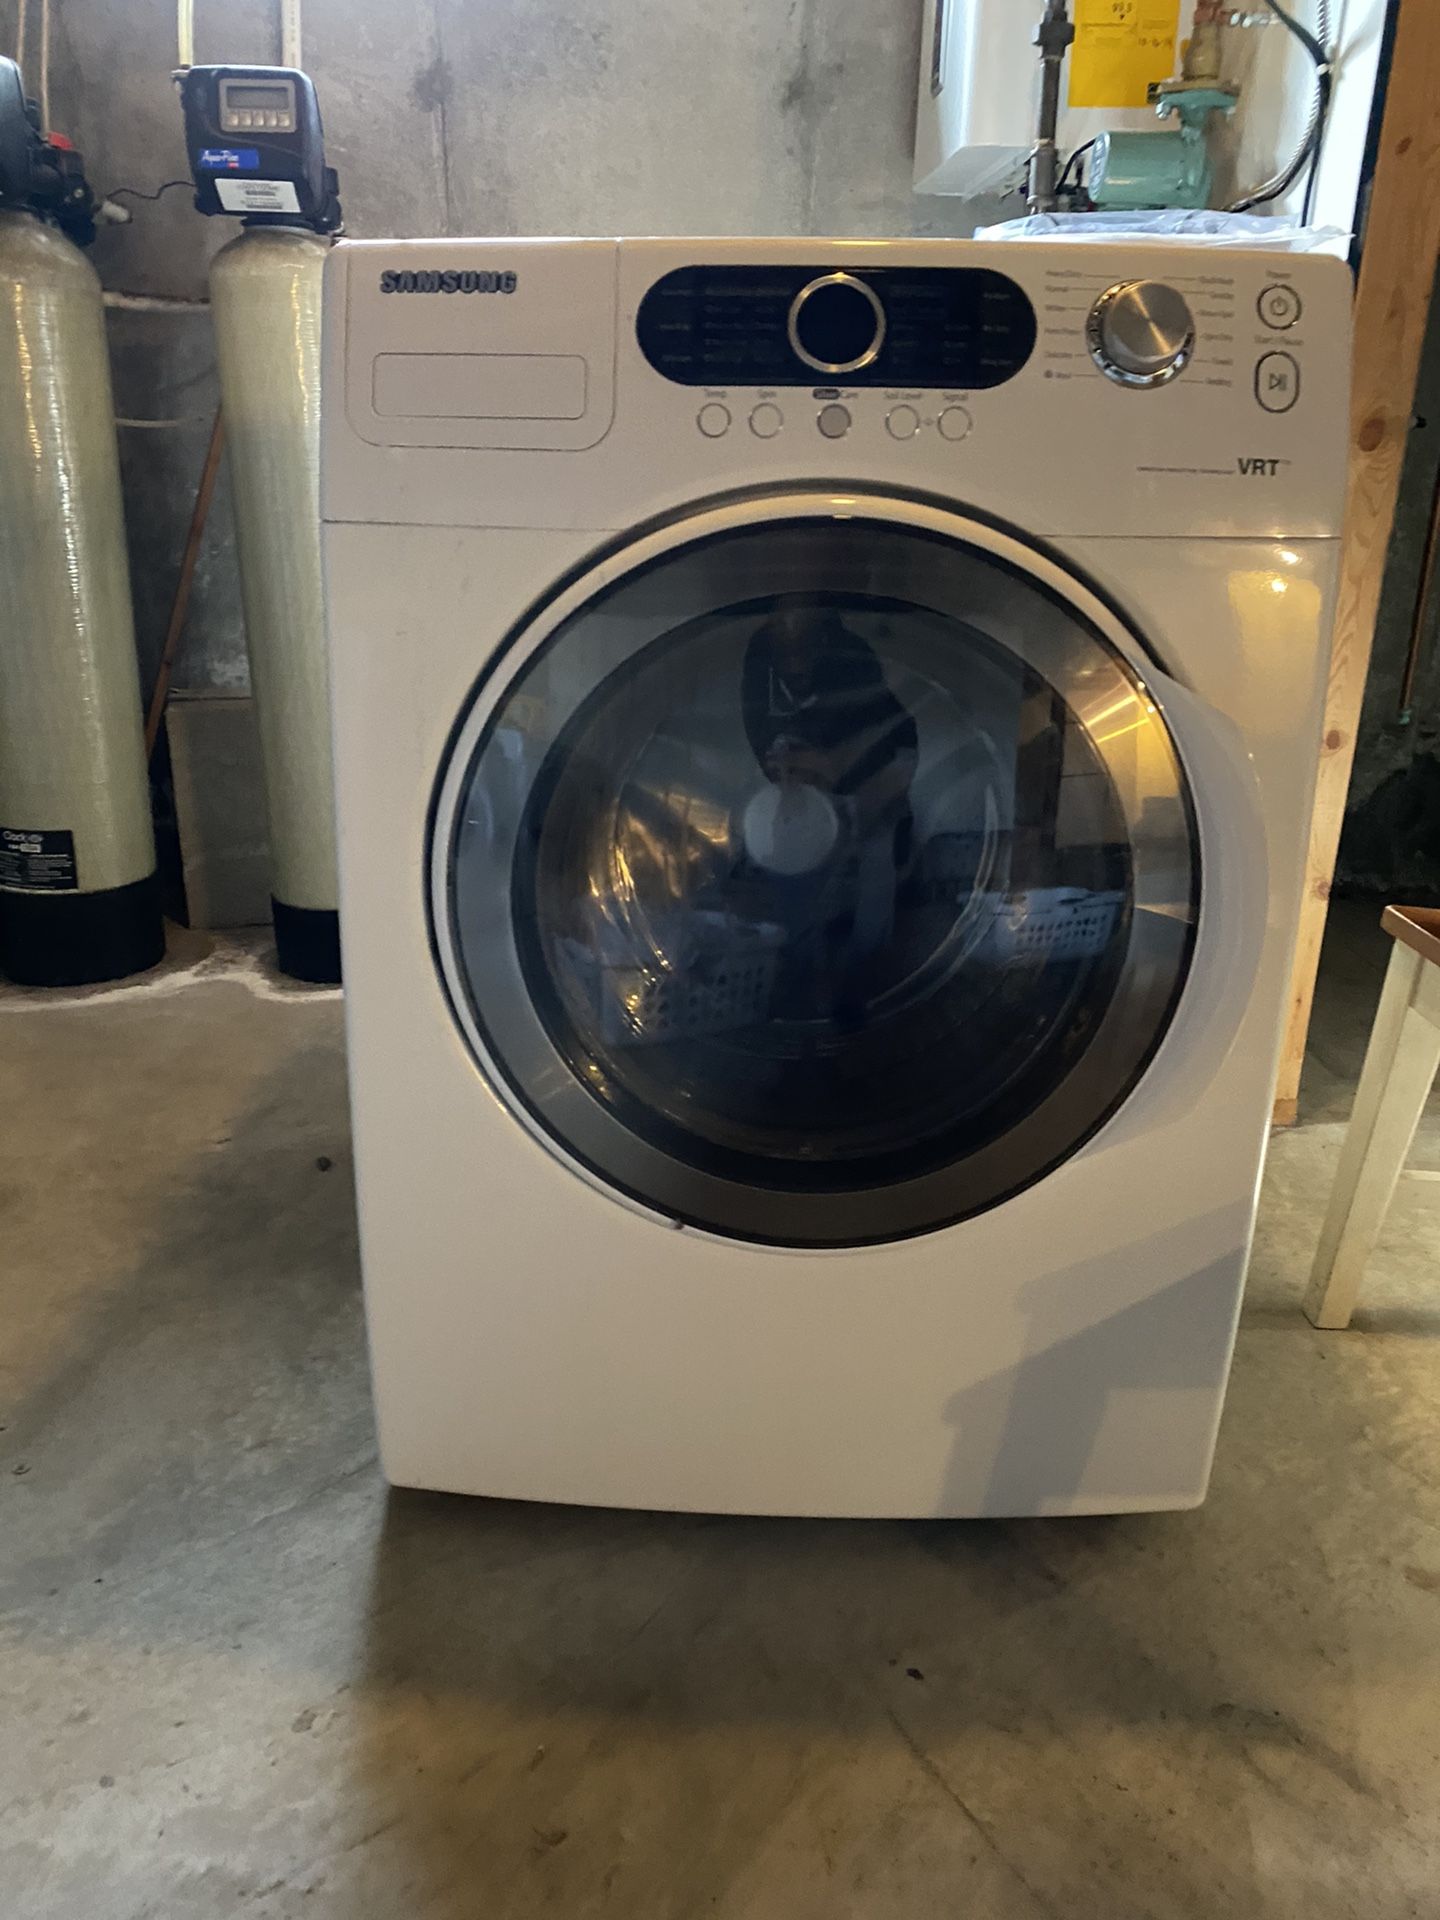 Samsung washer for sale. Works fine, $200